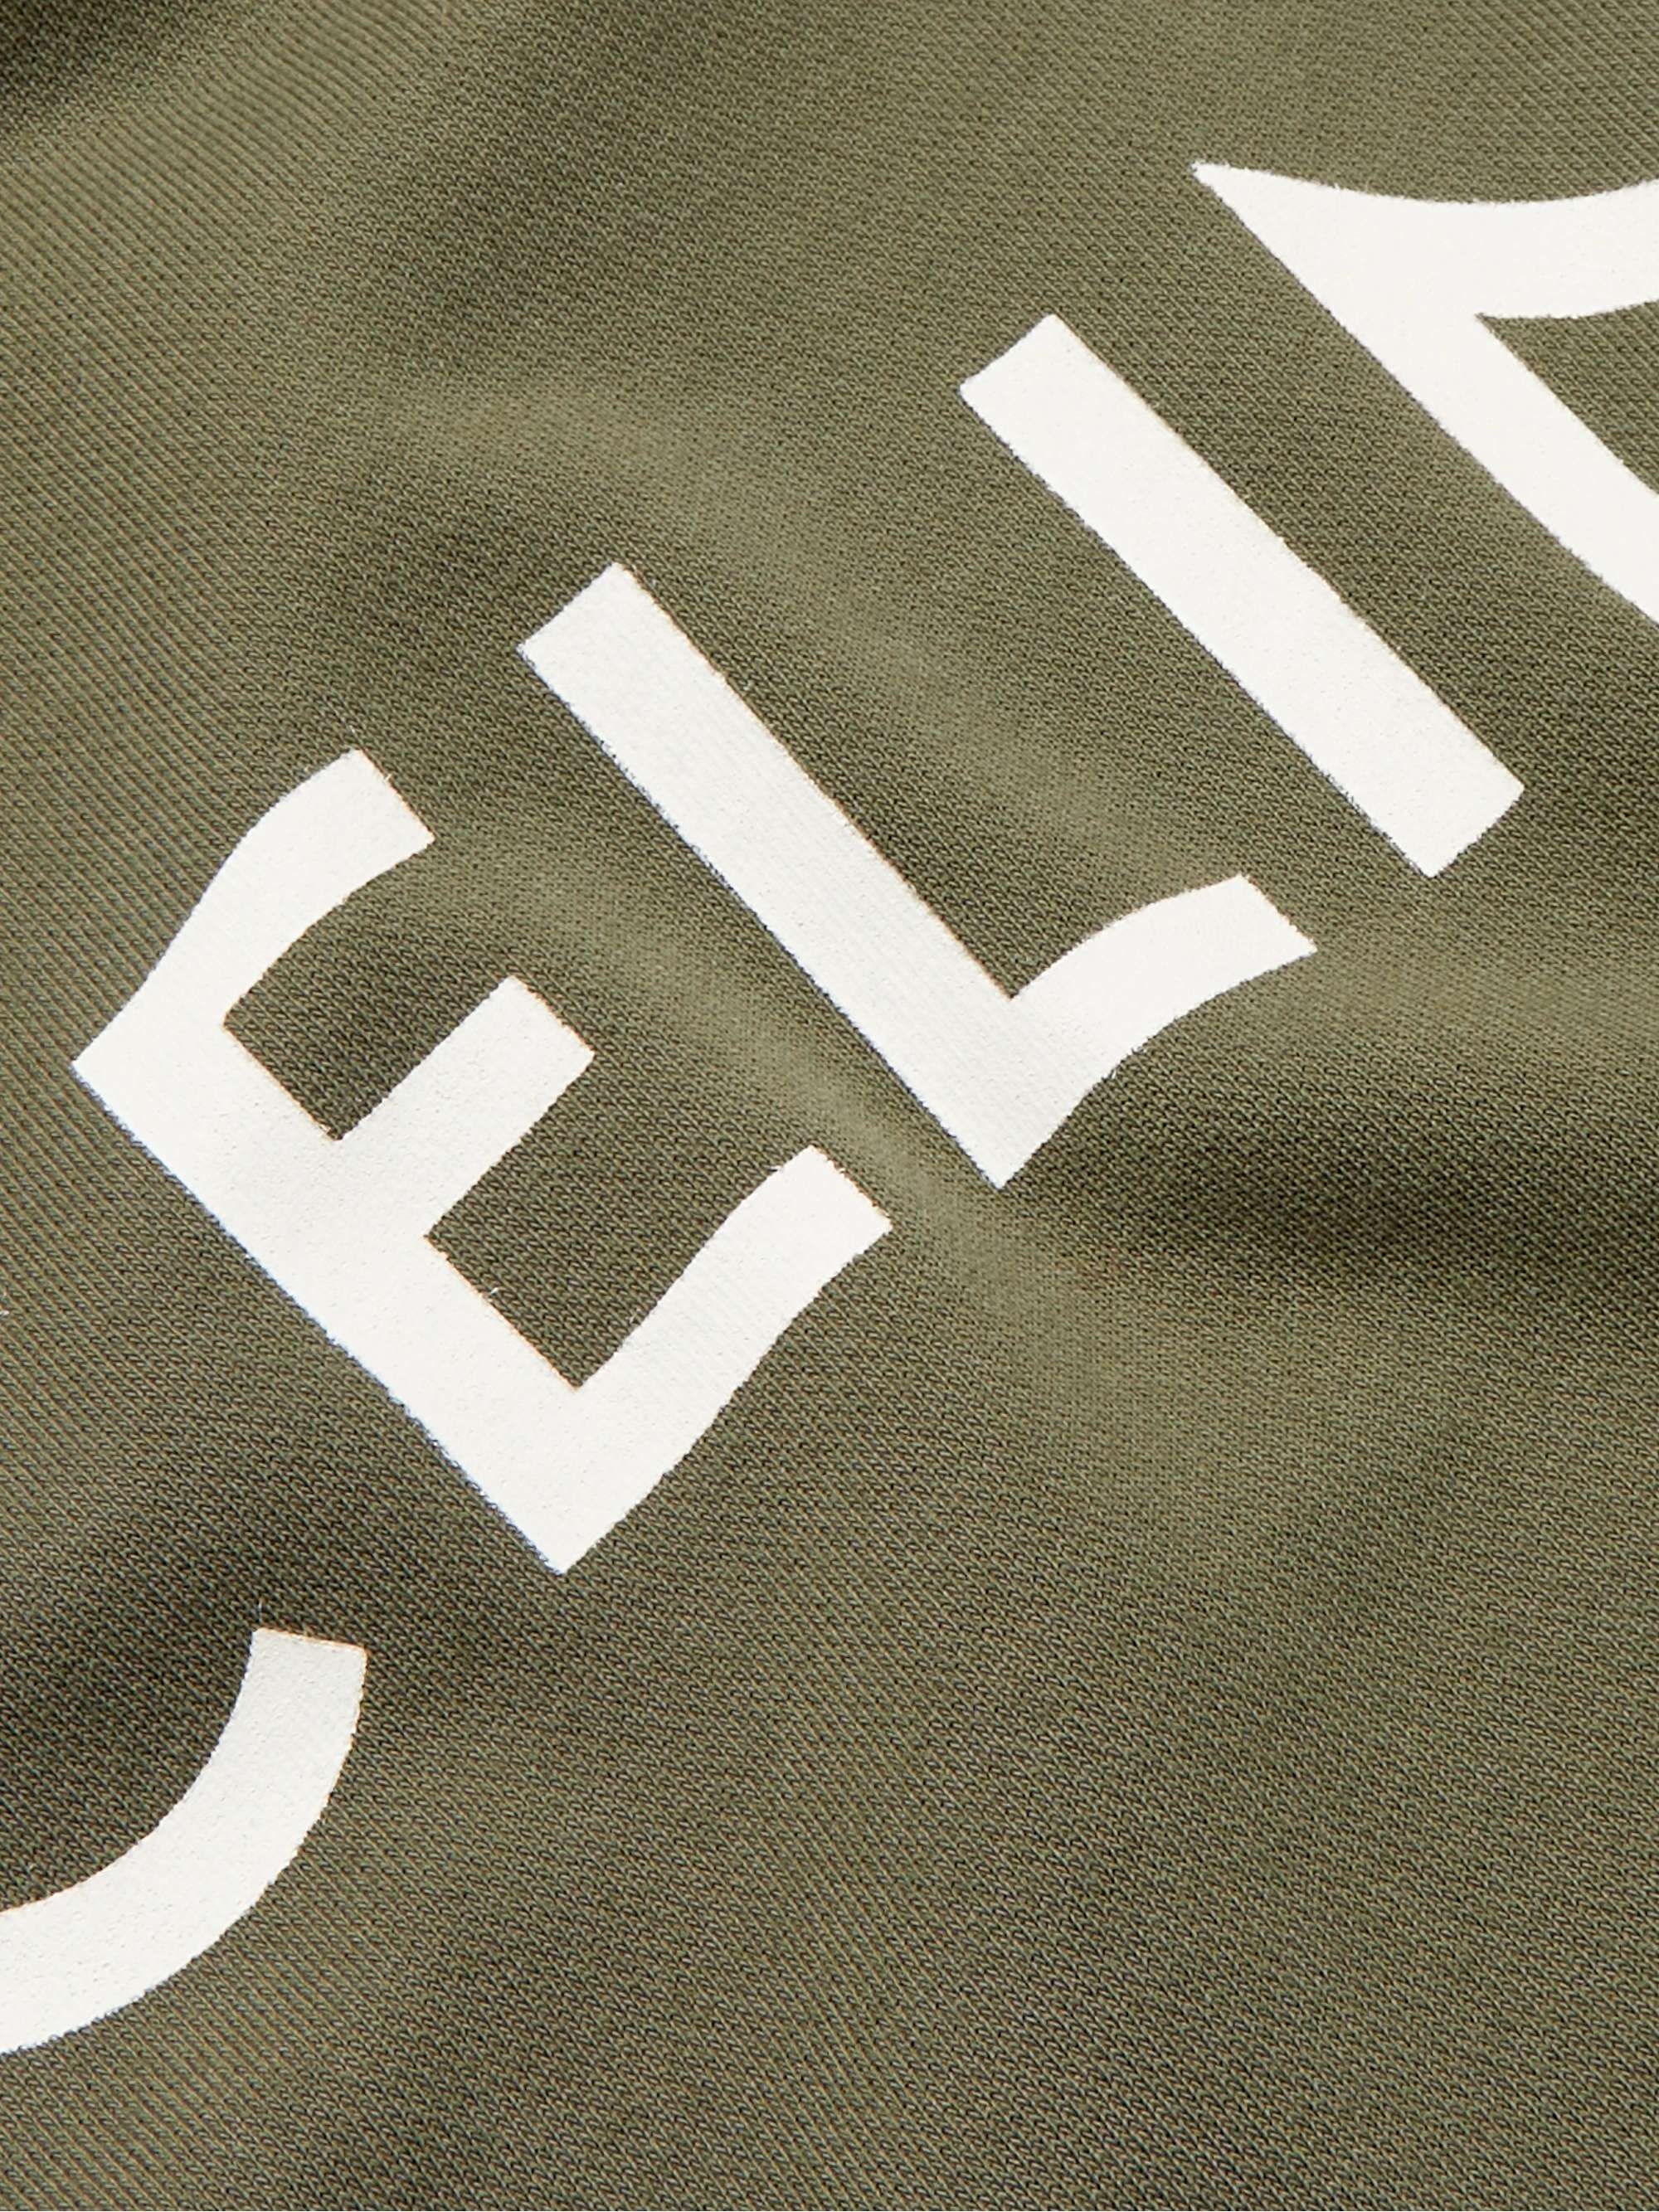 CELINE HOMME Logo-Print Cotton-Blend Jersey Hoodie